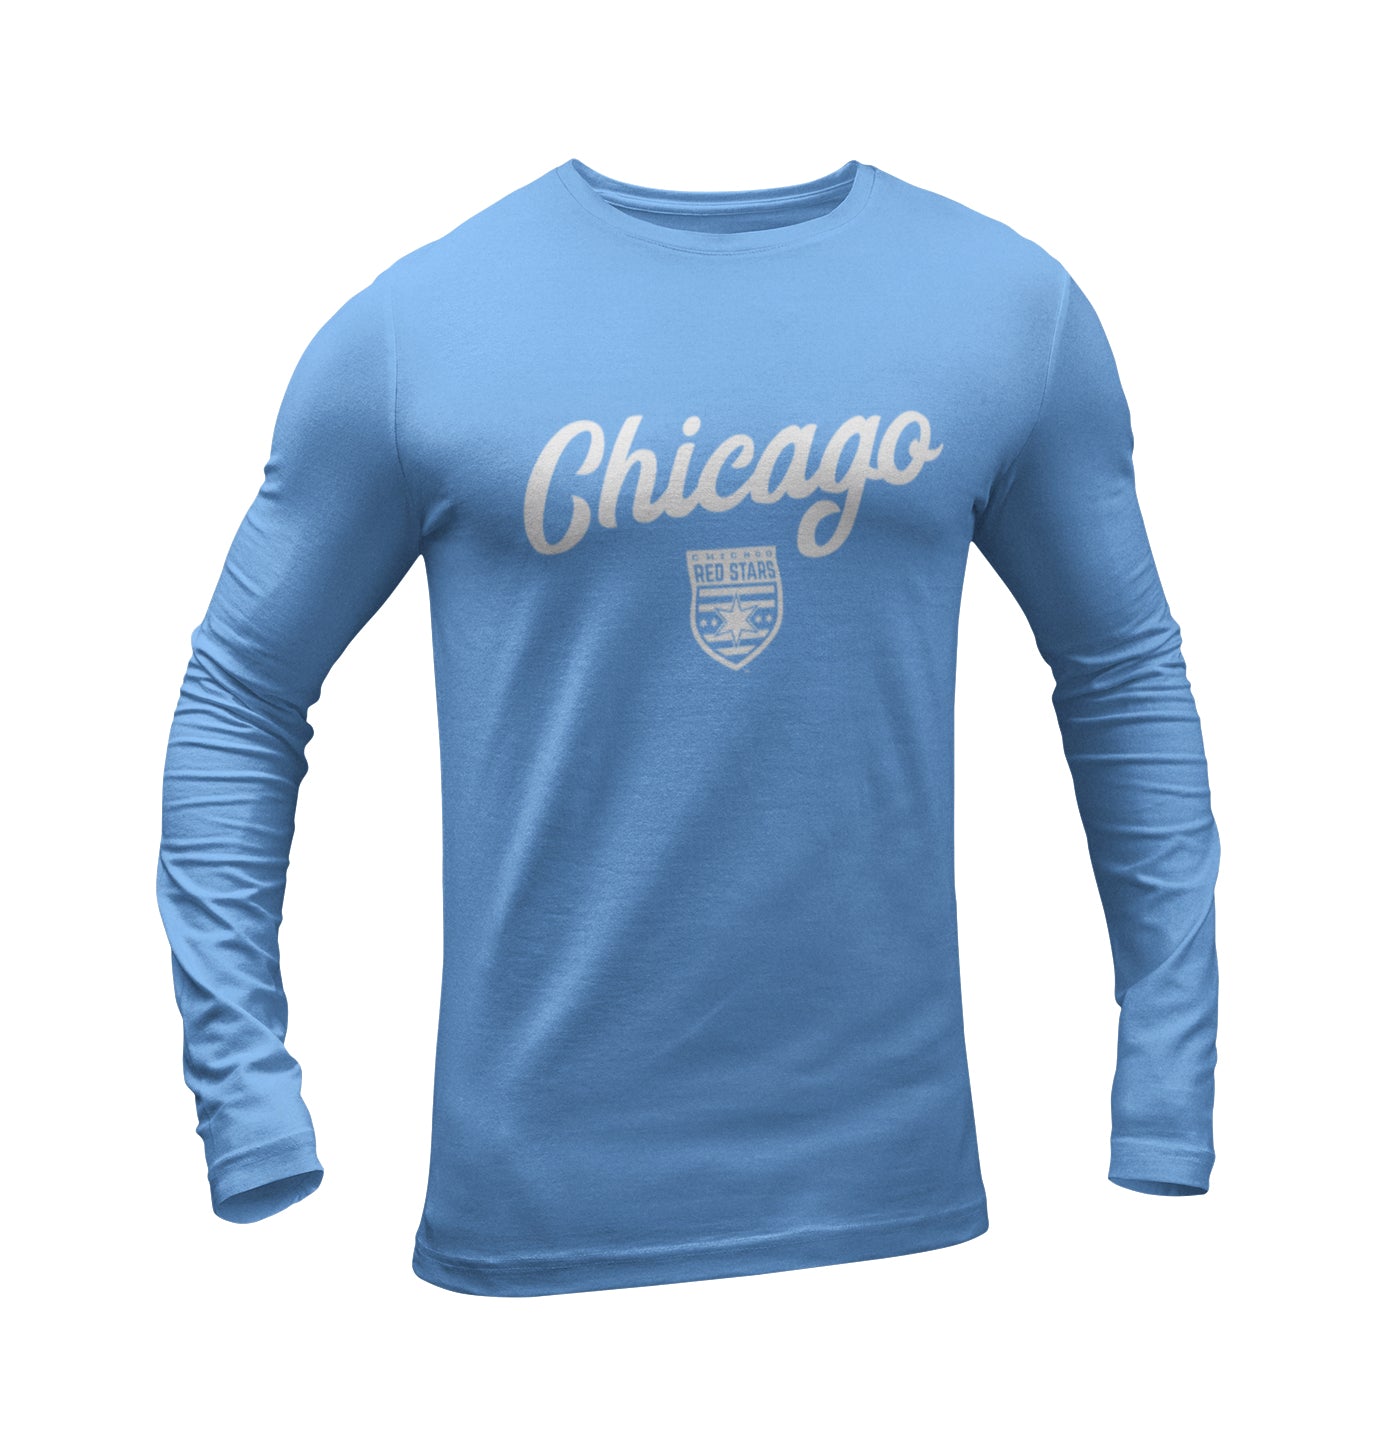 Chicago Red Stars Men's Nike Long Sleeve Cotton Tee Valor Blue / M